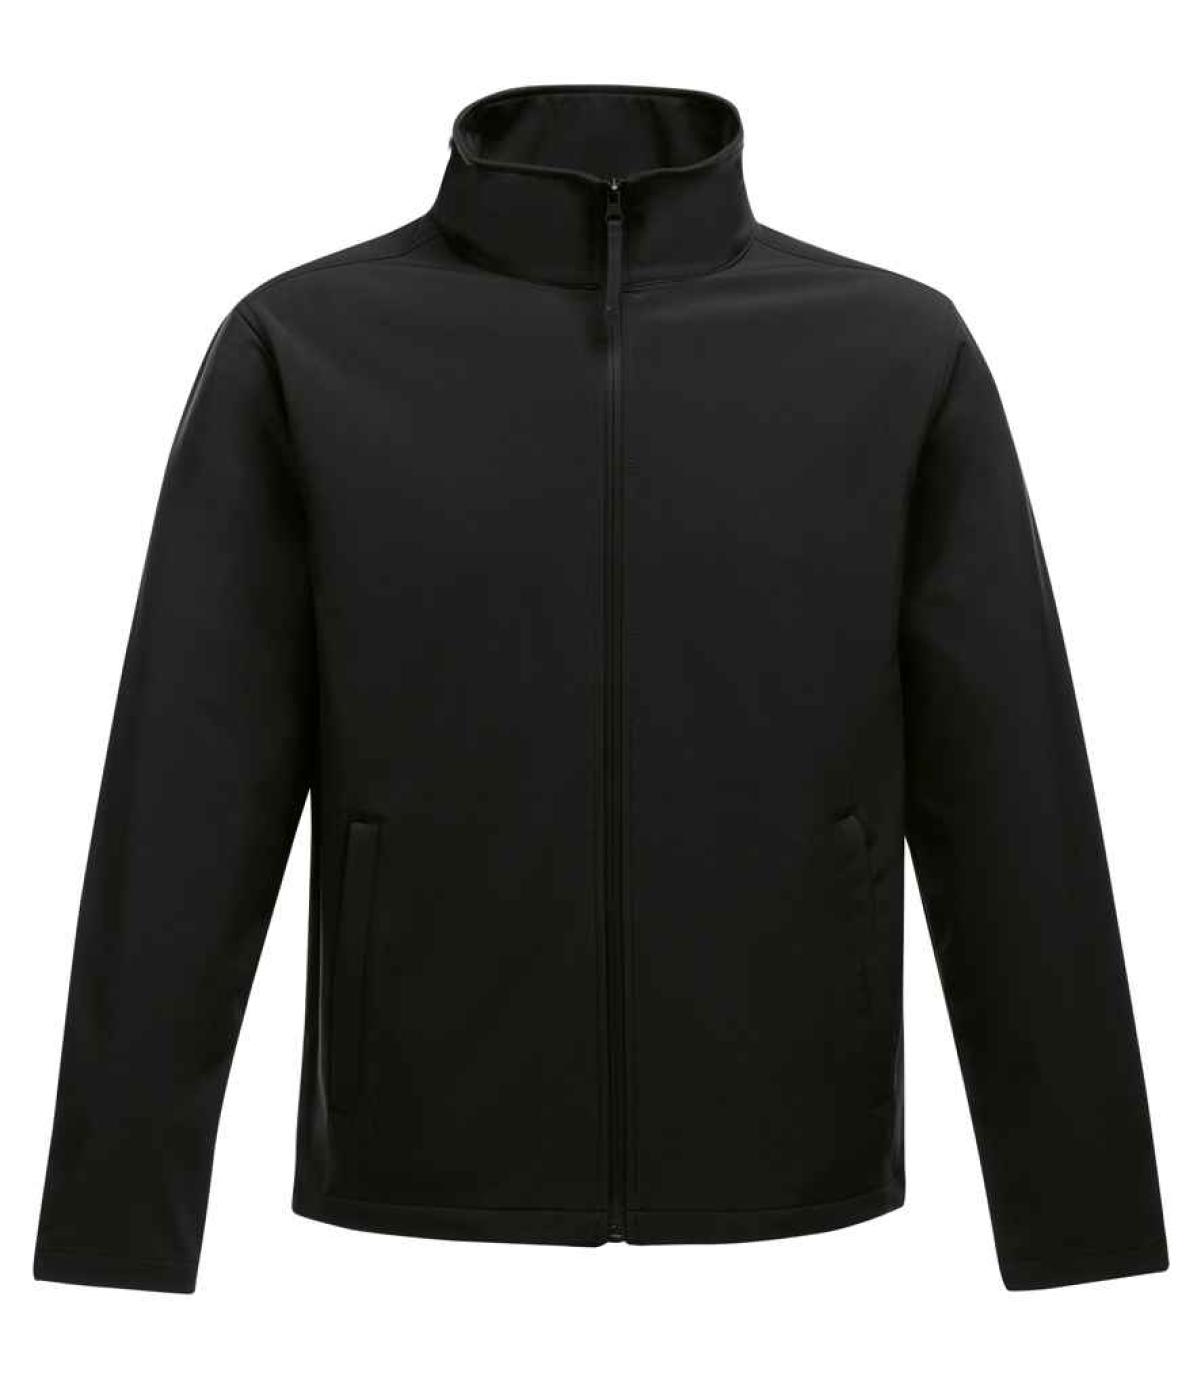 Regatta Ablaze Printable Soft Shell Jacket - Black/Black | Order ...